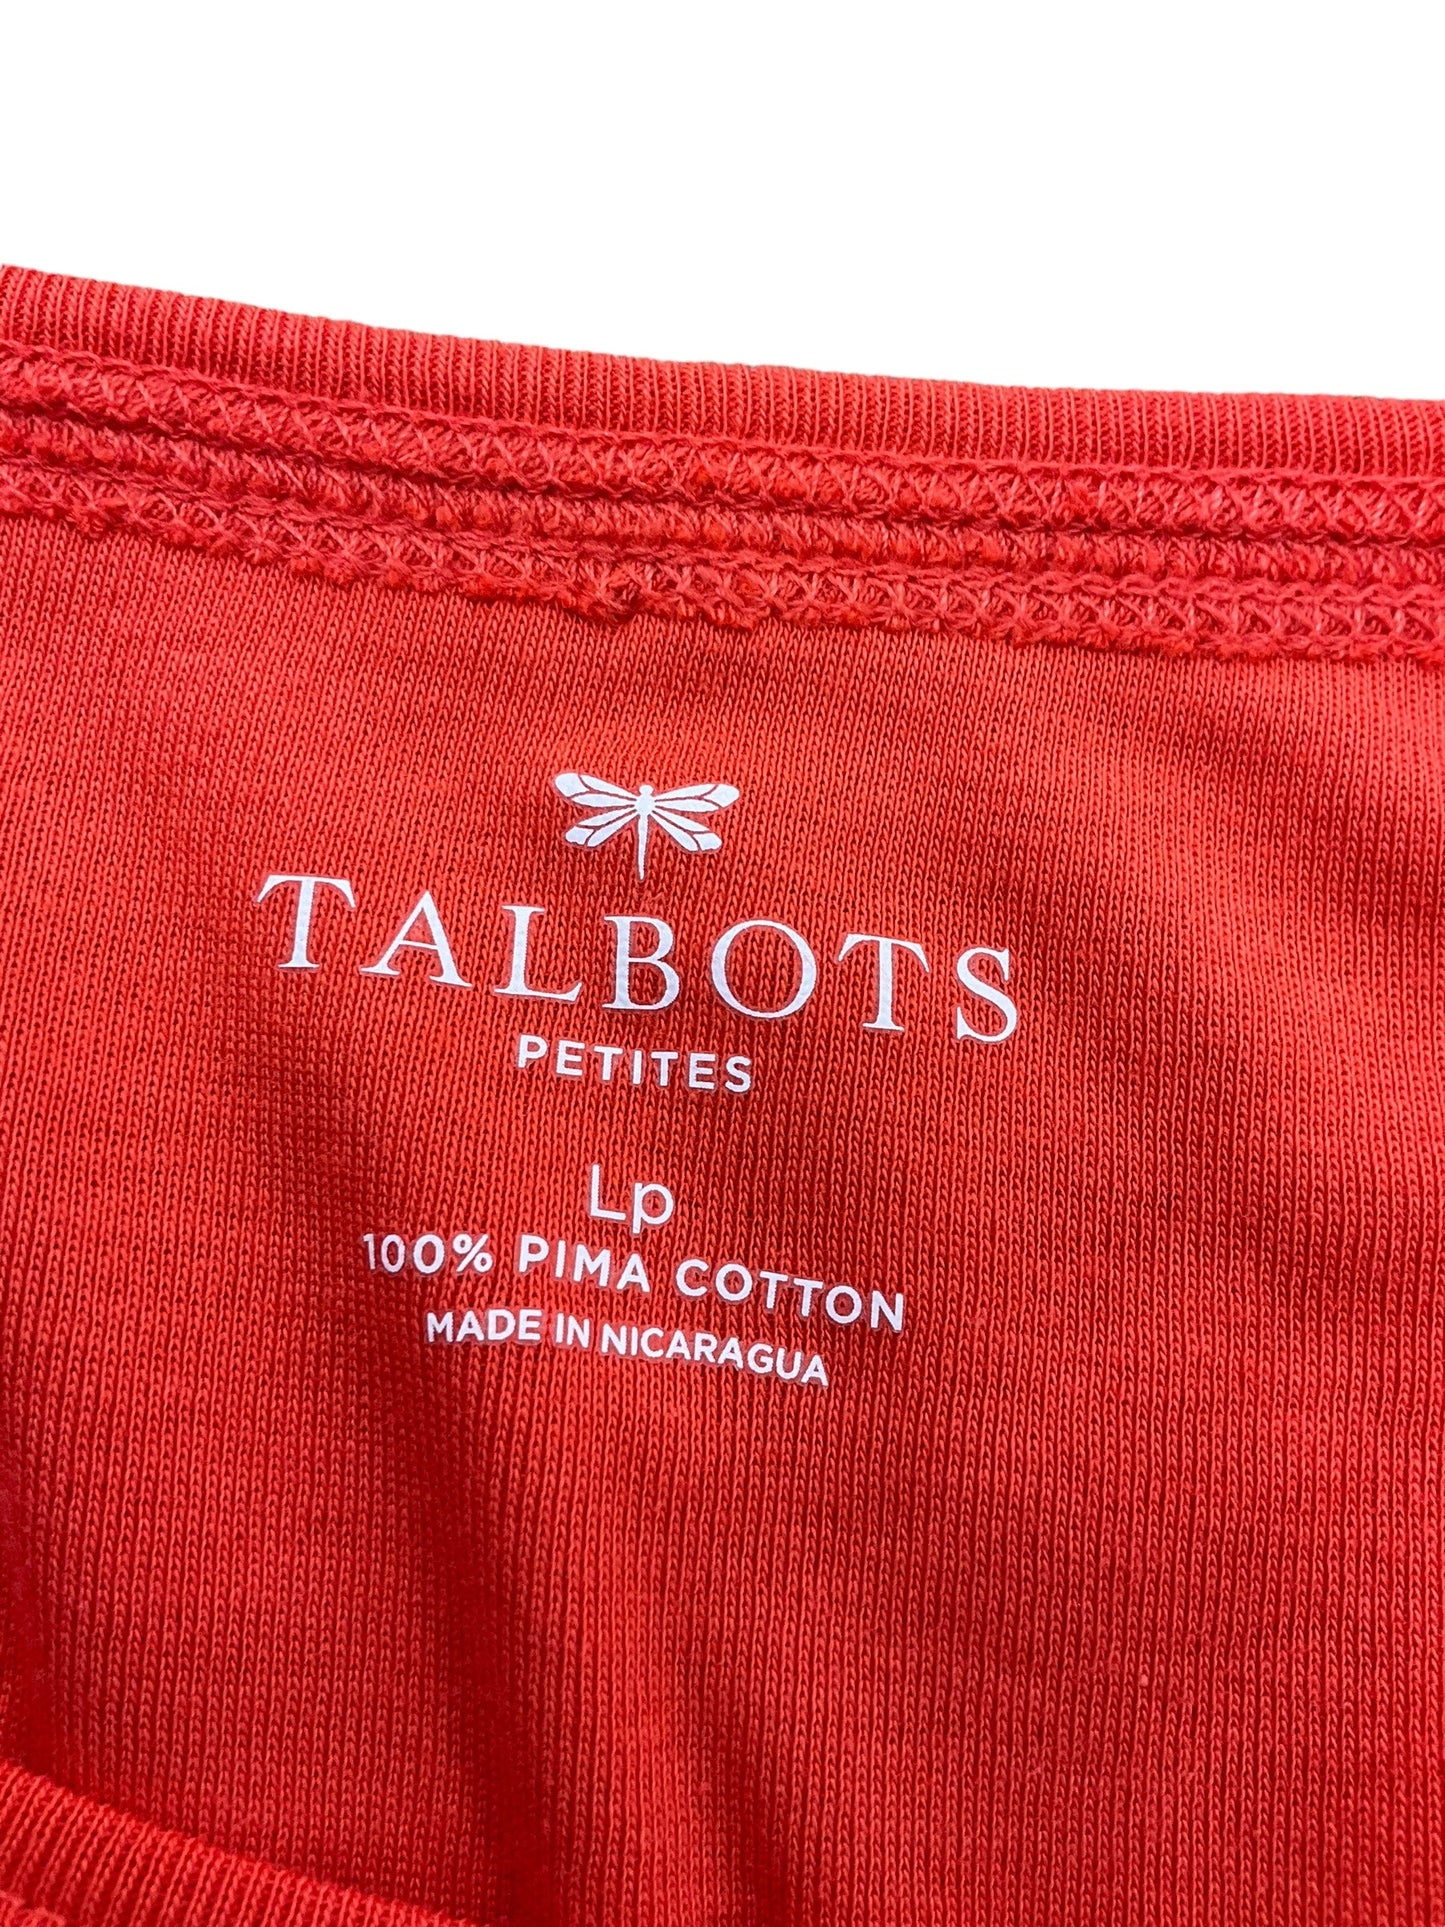 Orange Top Short Sleeve Basic Talbots, Size L